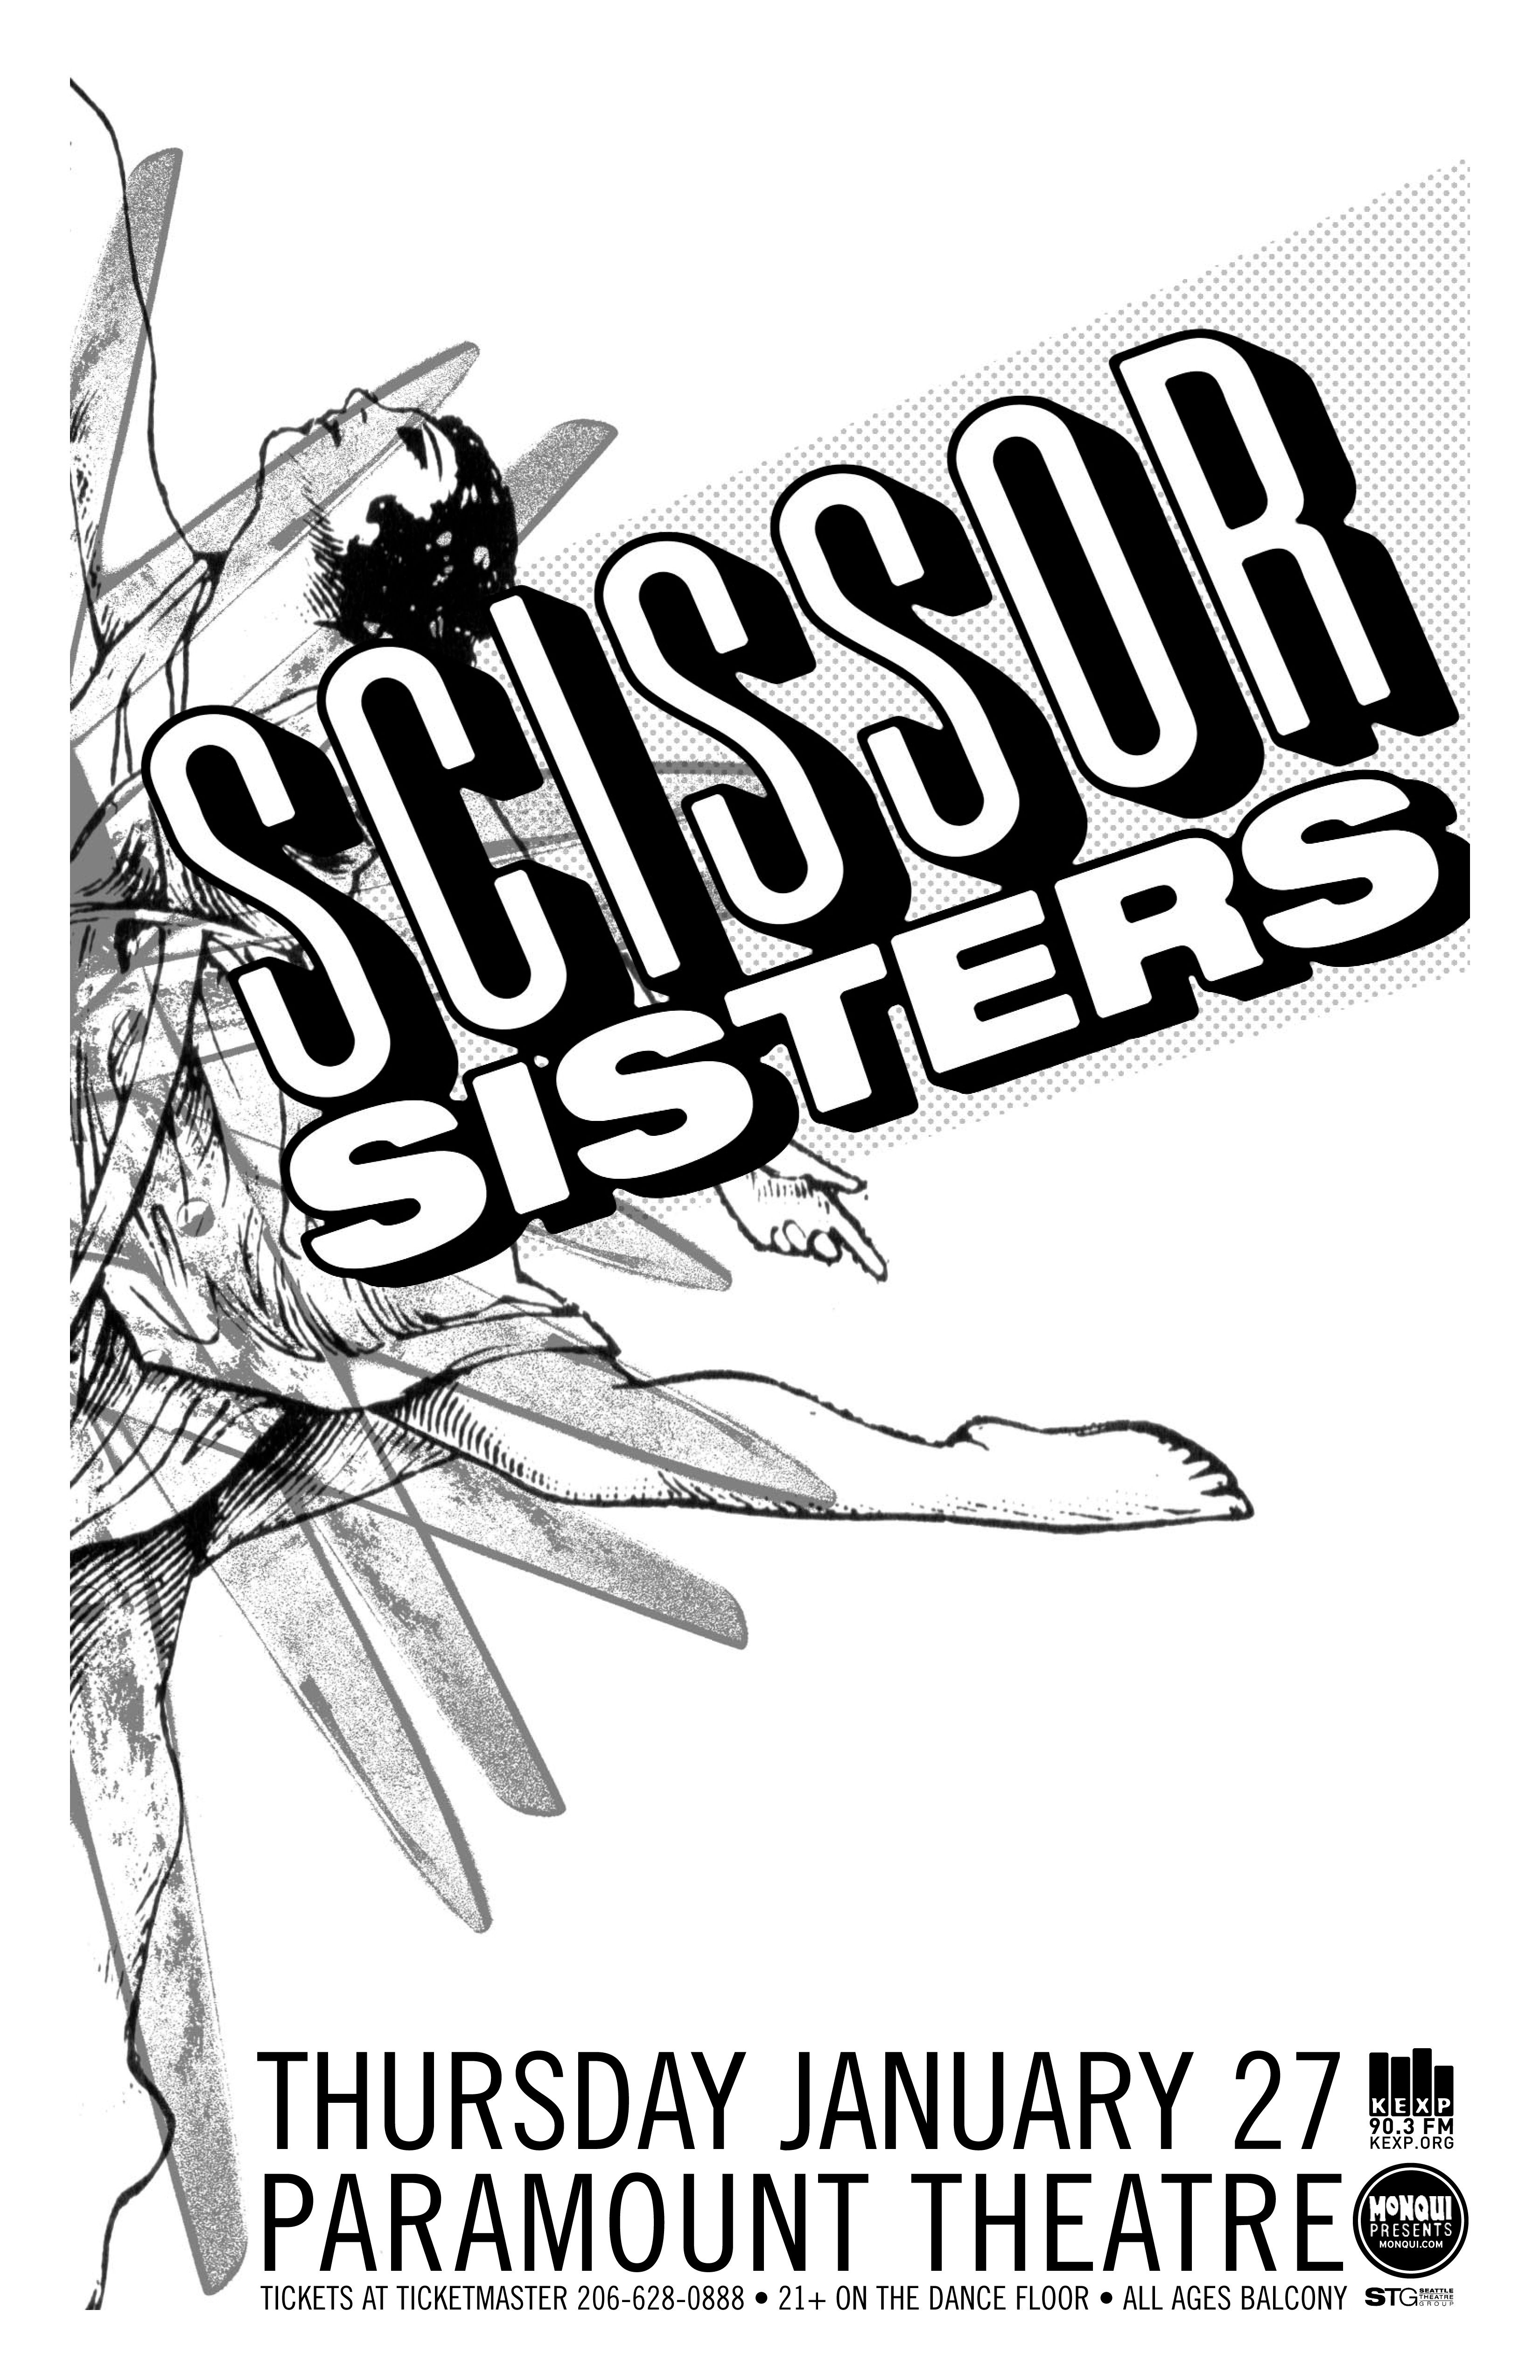 MXP-147.5 Scissor Sisters 2005 Paramount Theater  Jan 27 Concert Poster